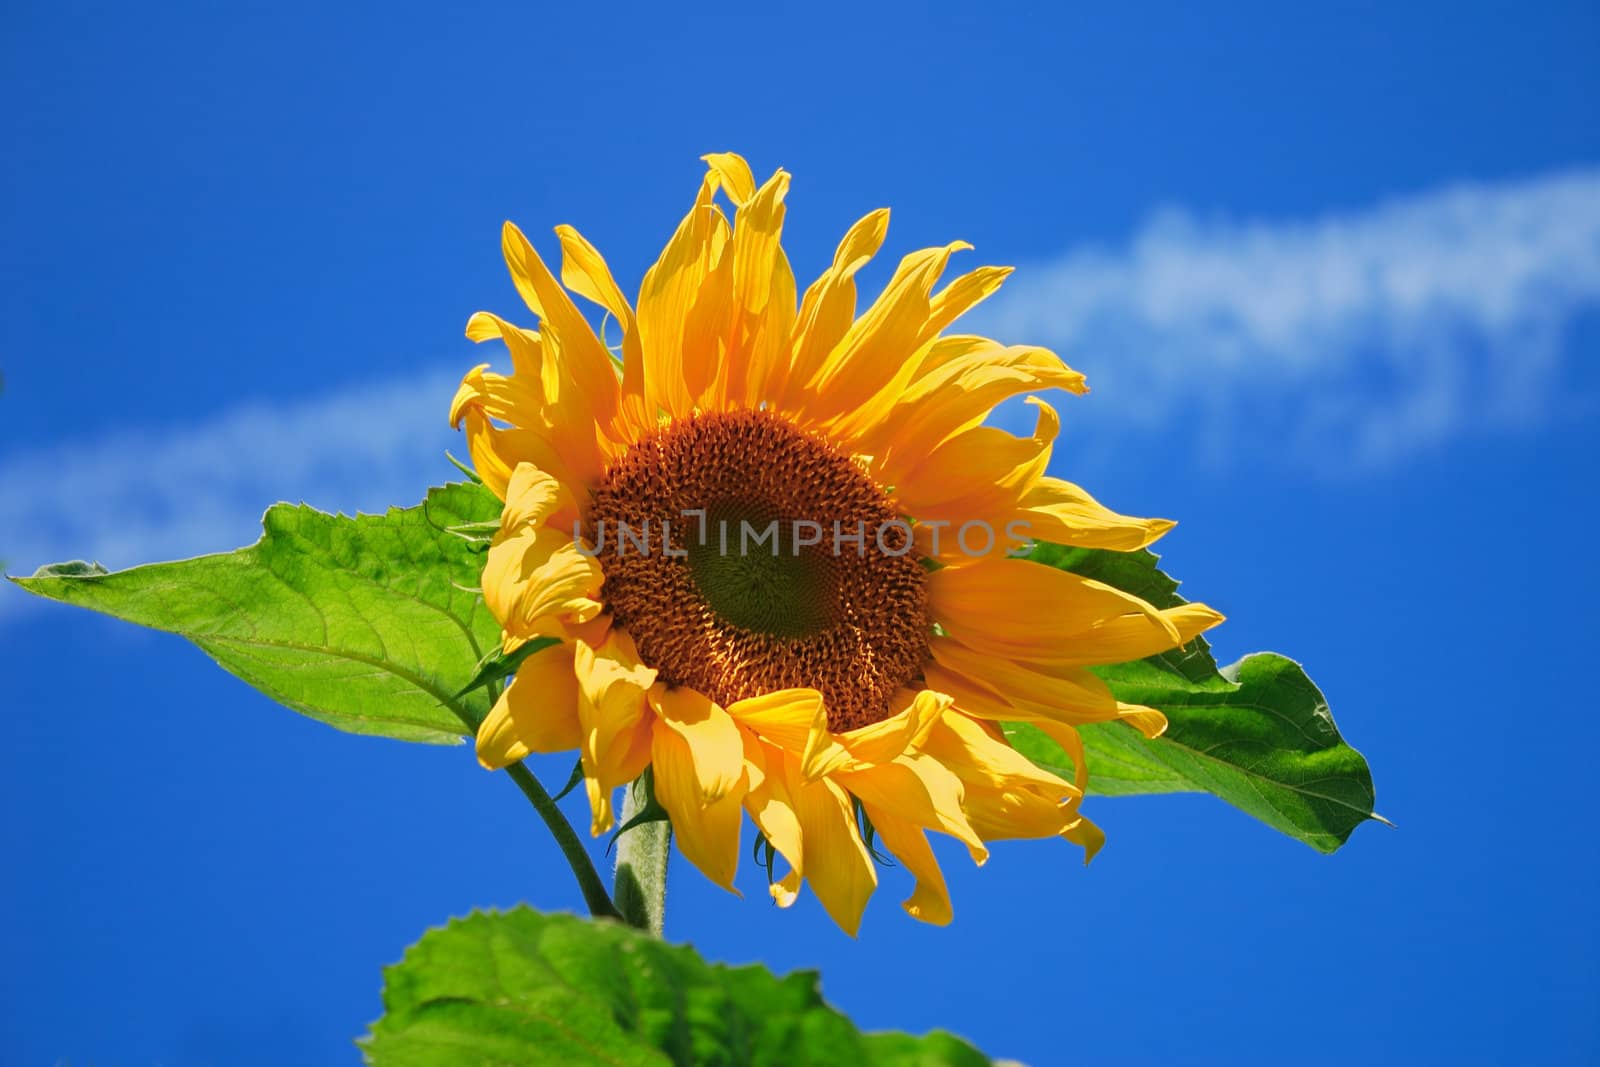 Sunflower by Ohotnik